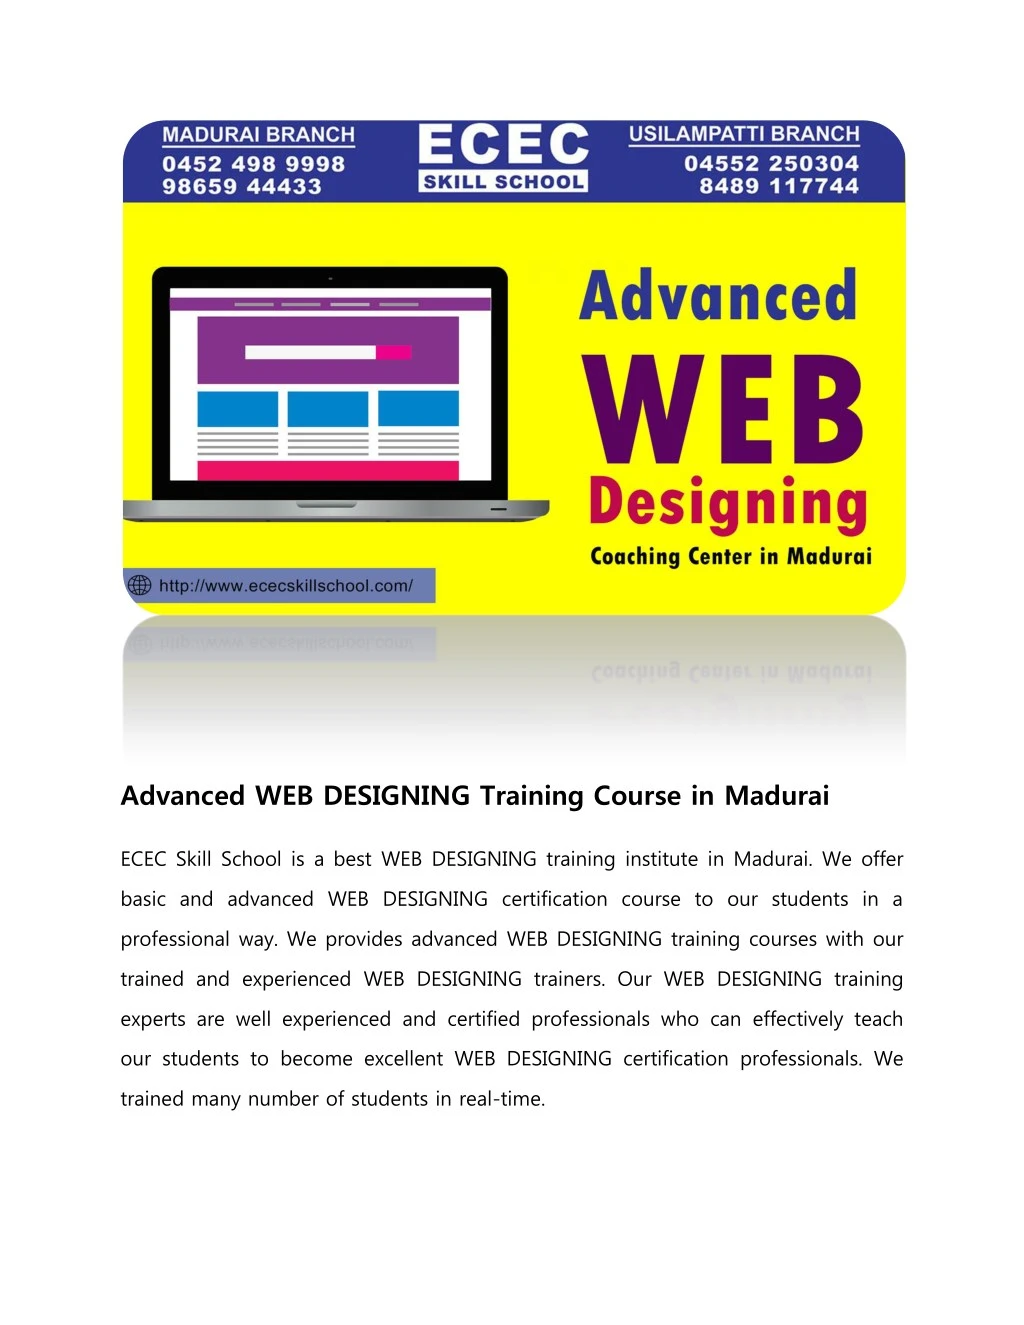 advanced web designing training course in madurai